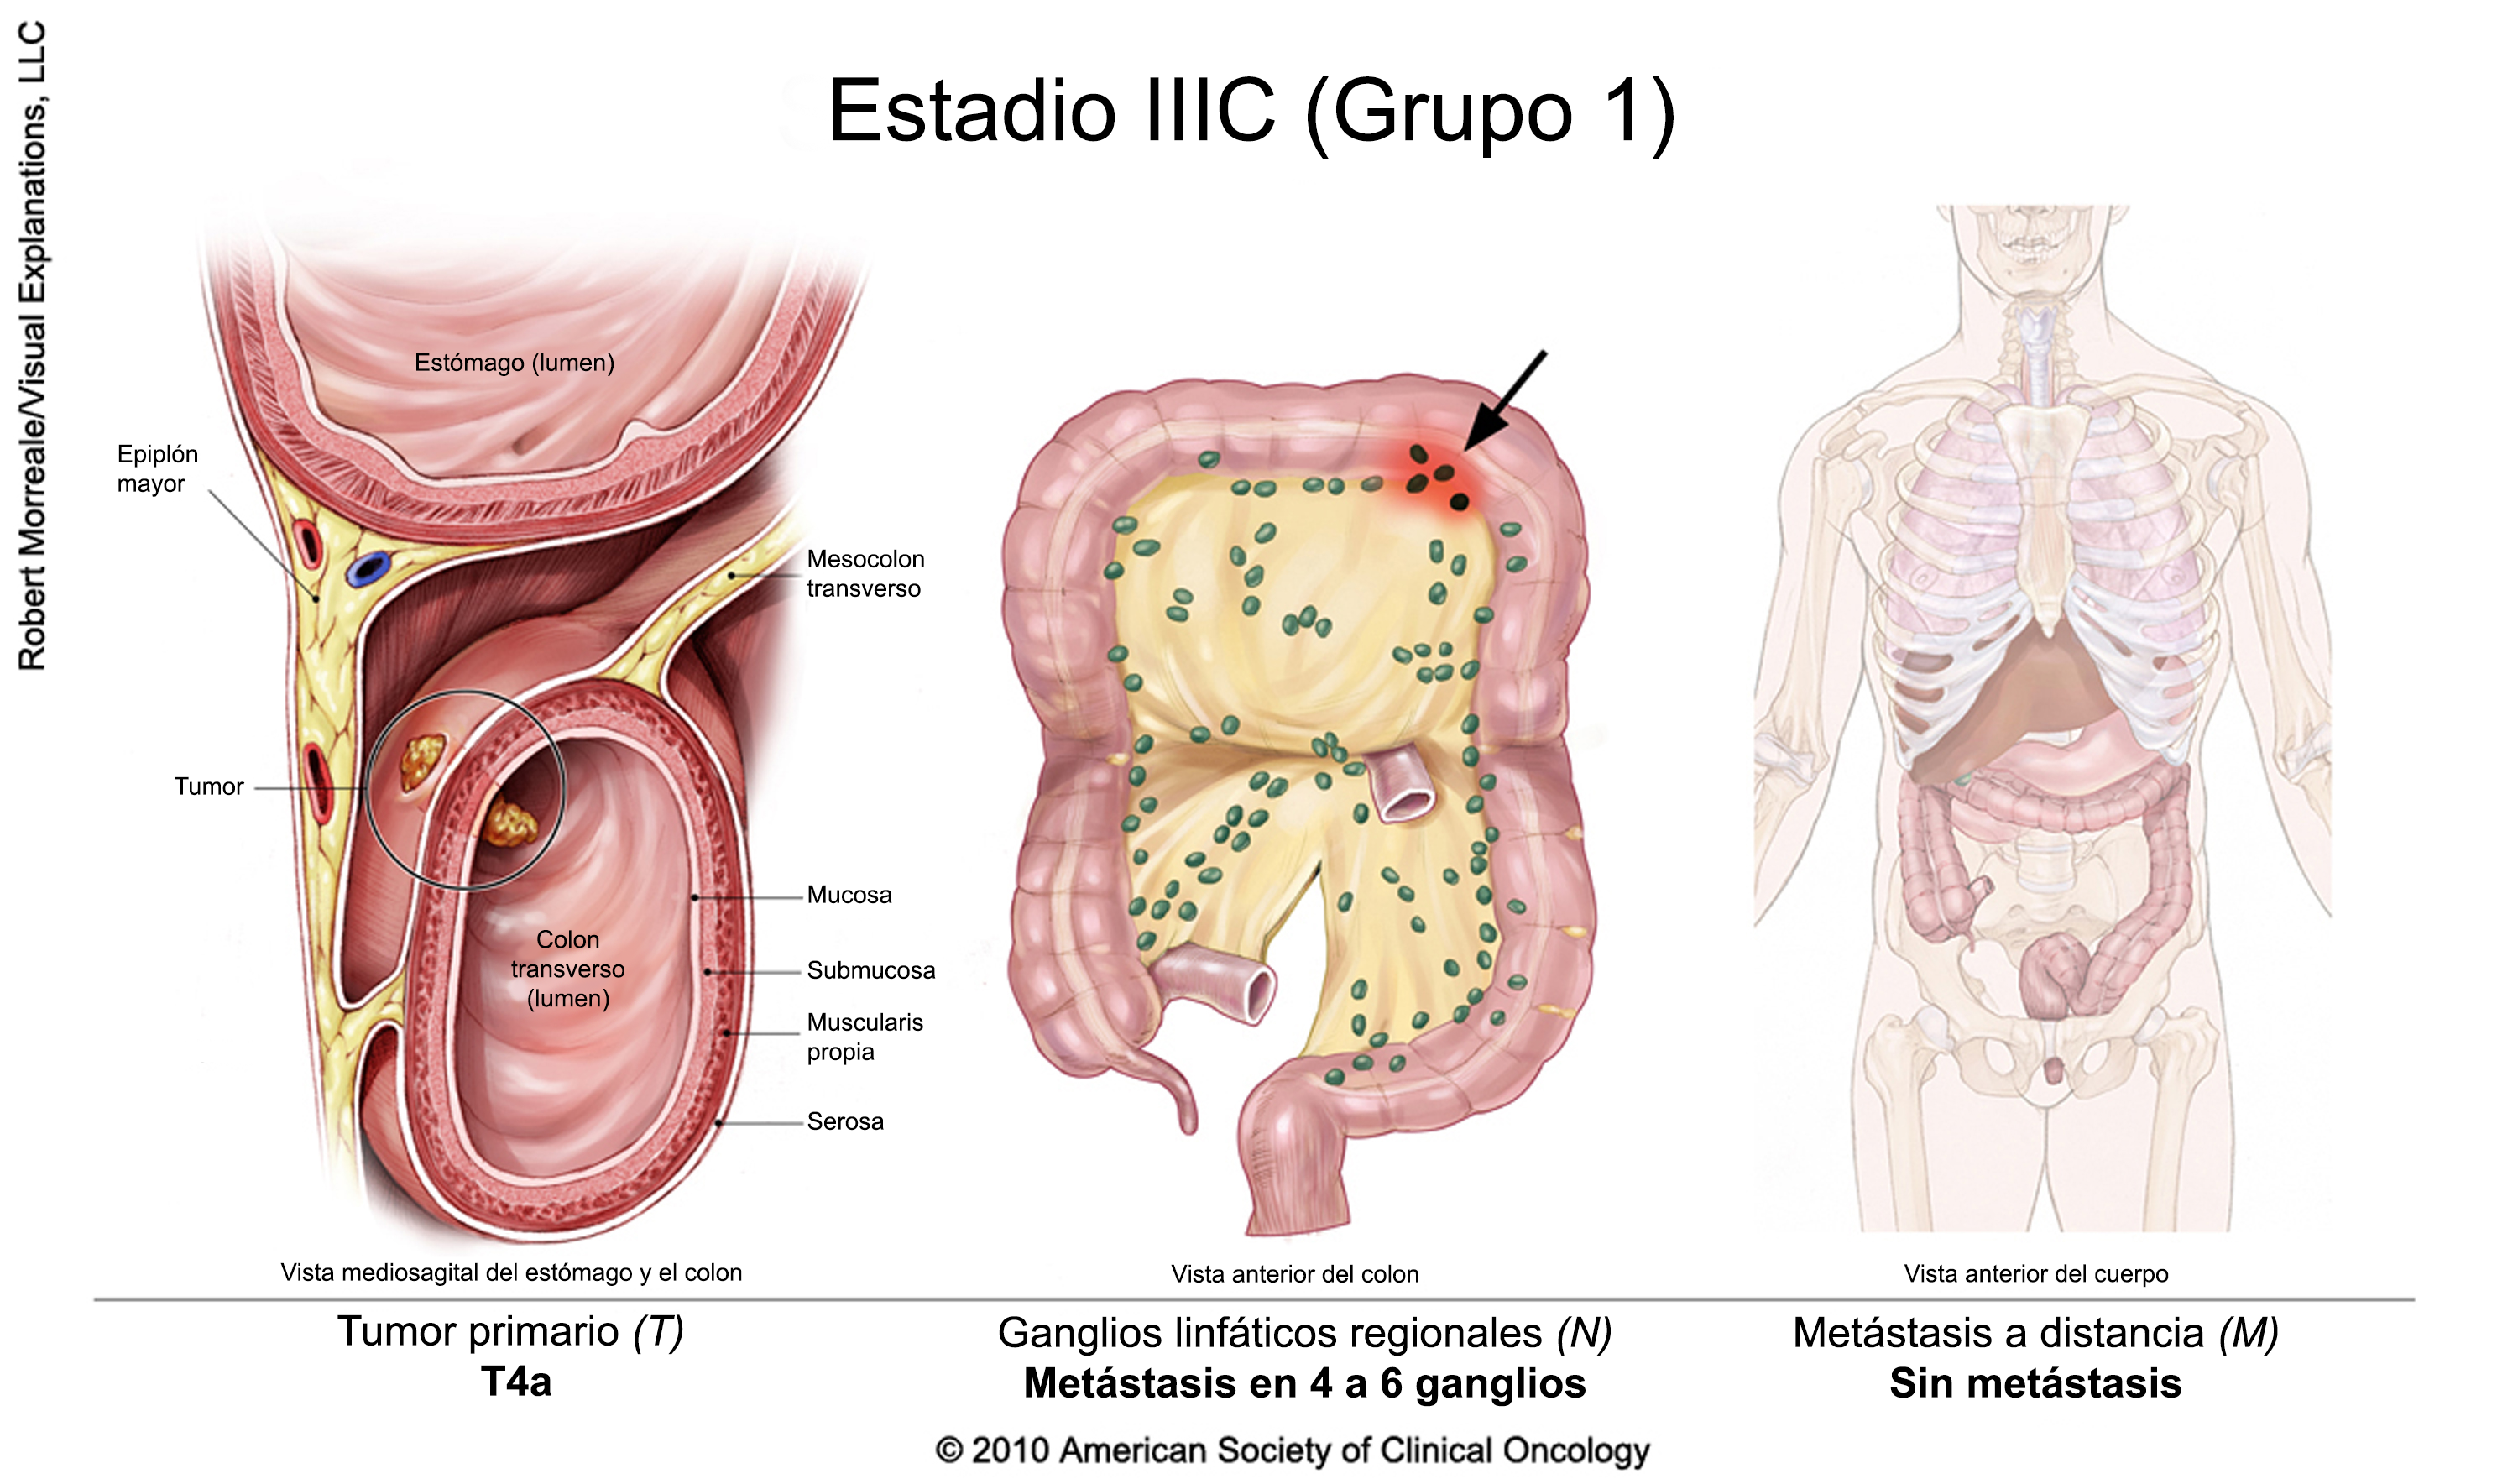 Adenocarcinom intestinal g2